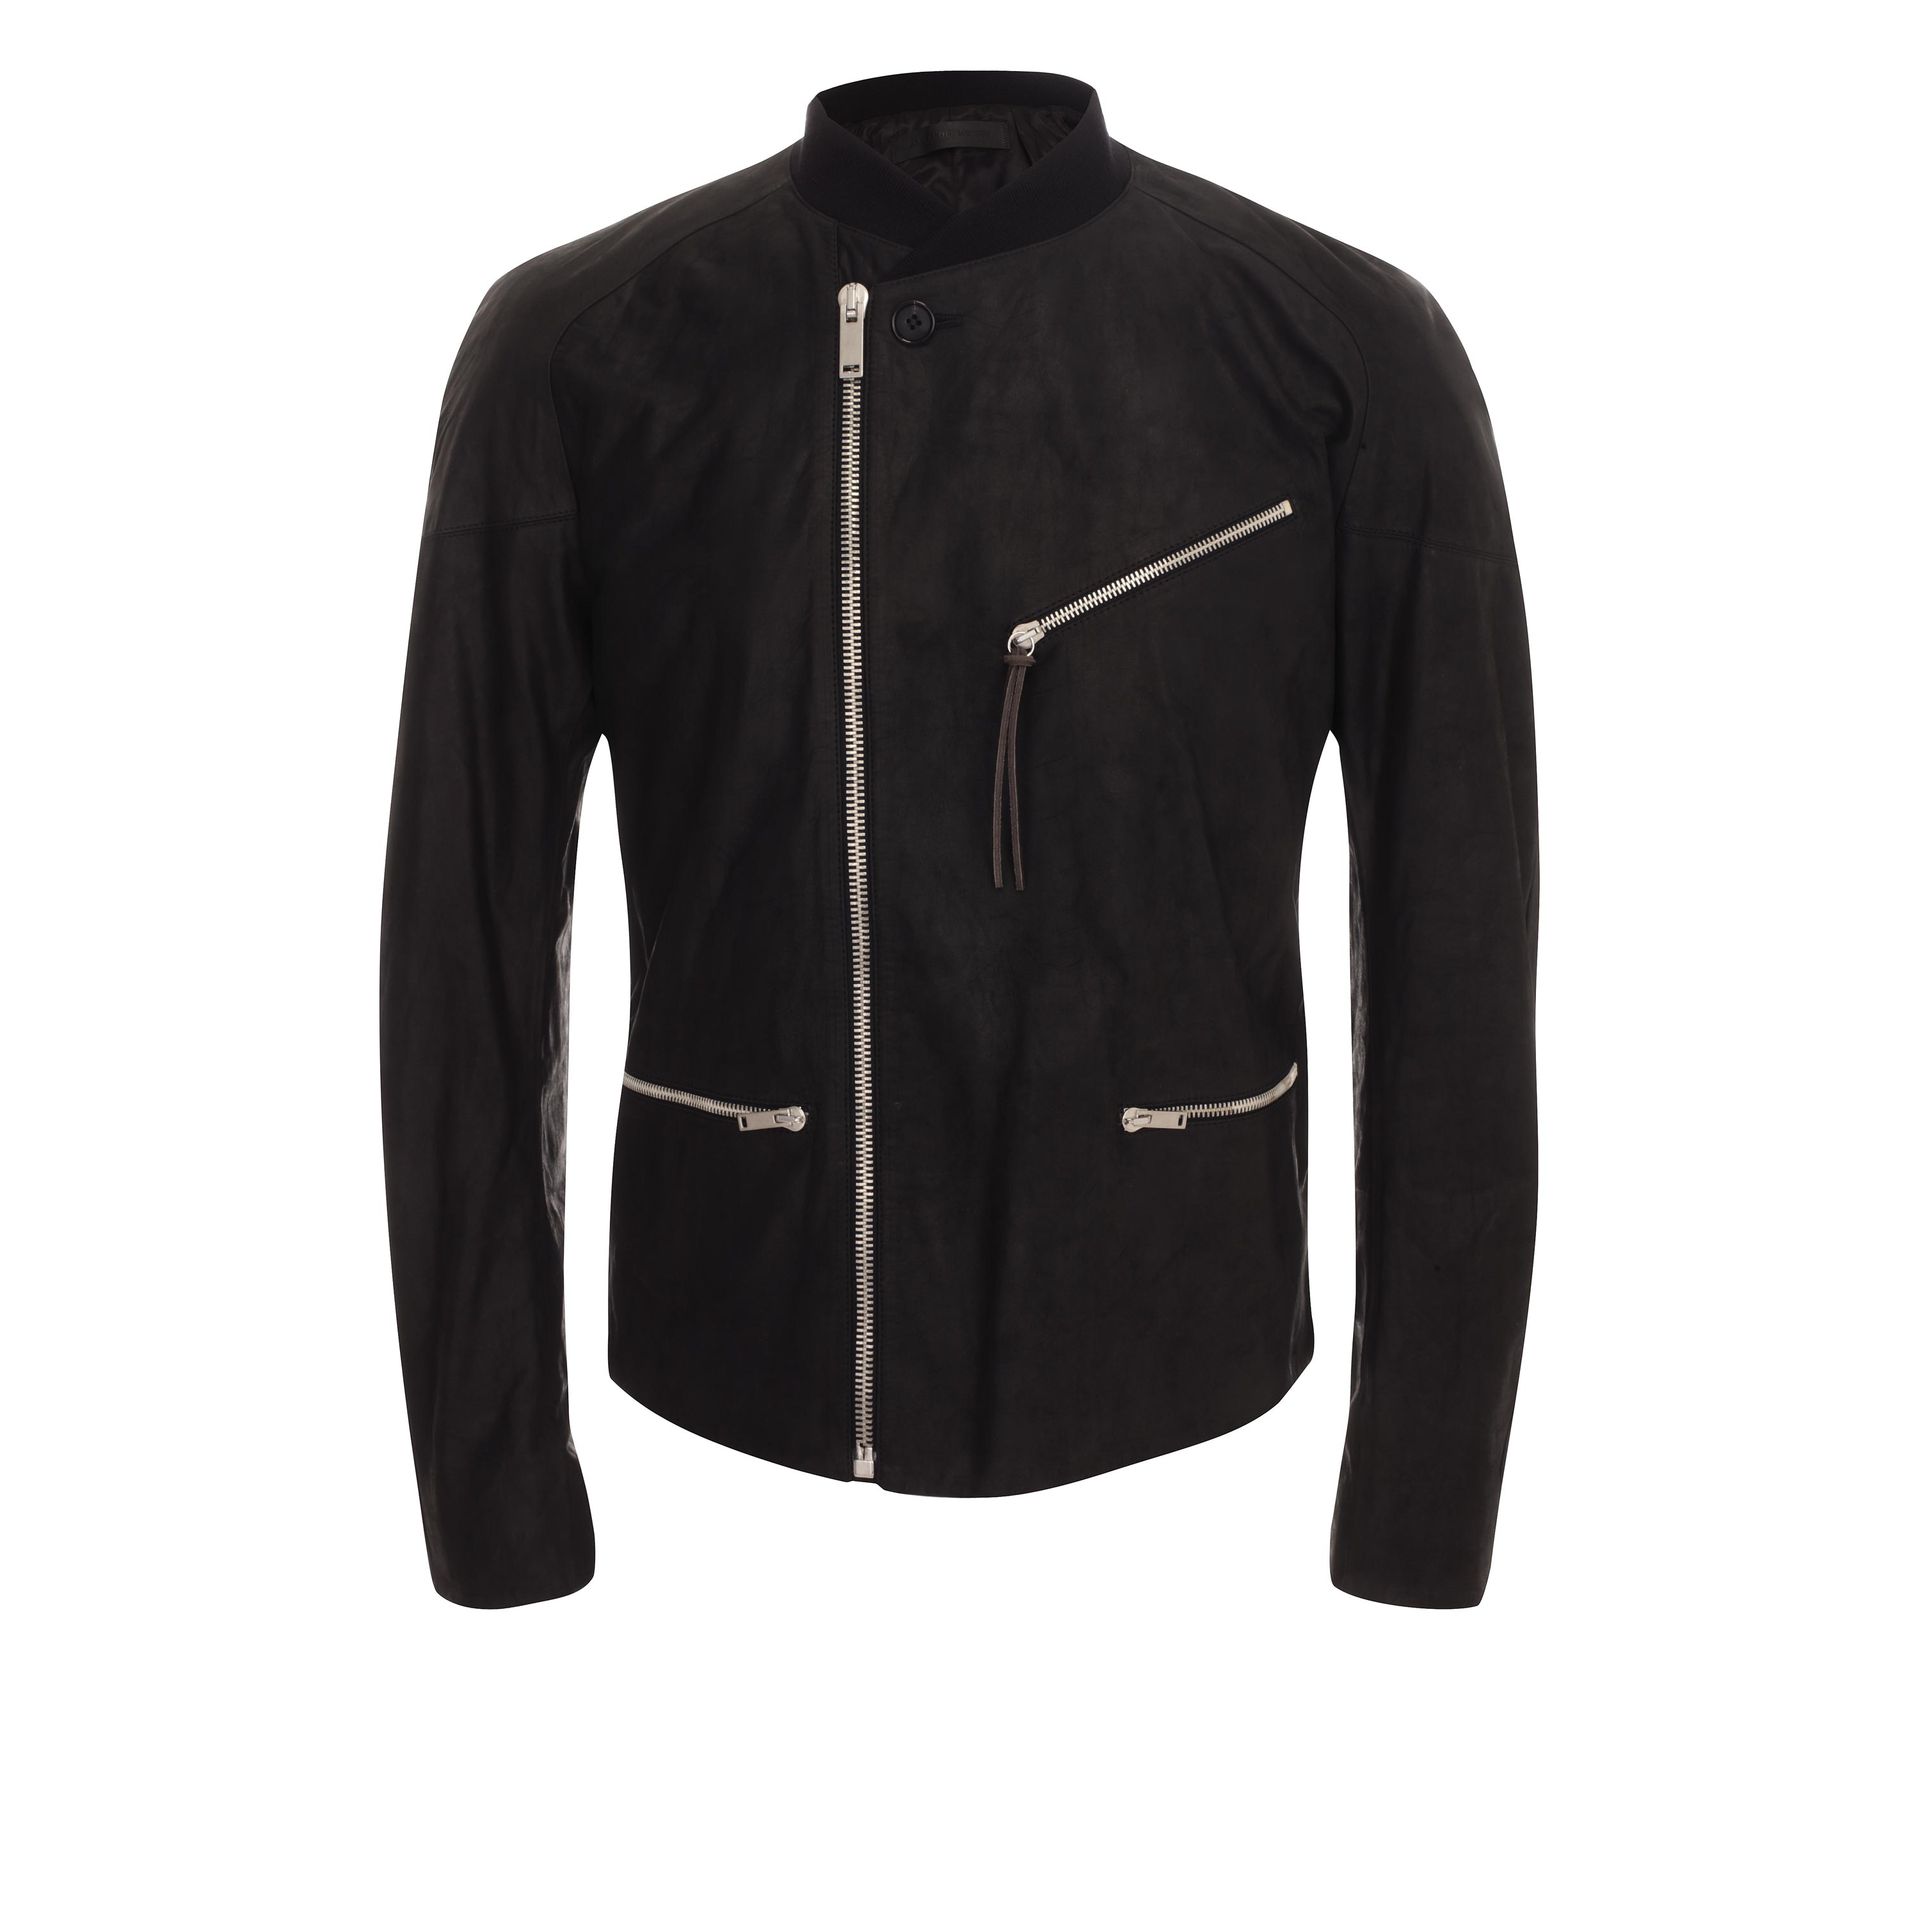 Lyst - Alexander Mcqueen Leather Jacket in Black for Men